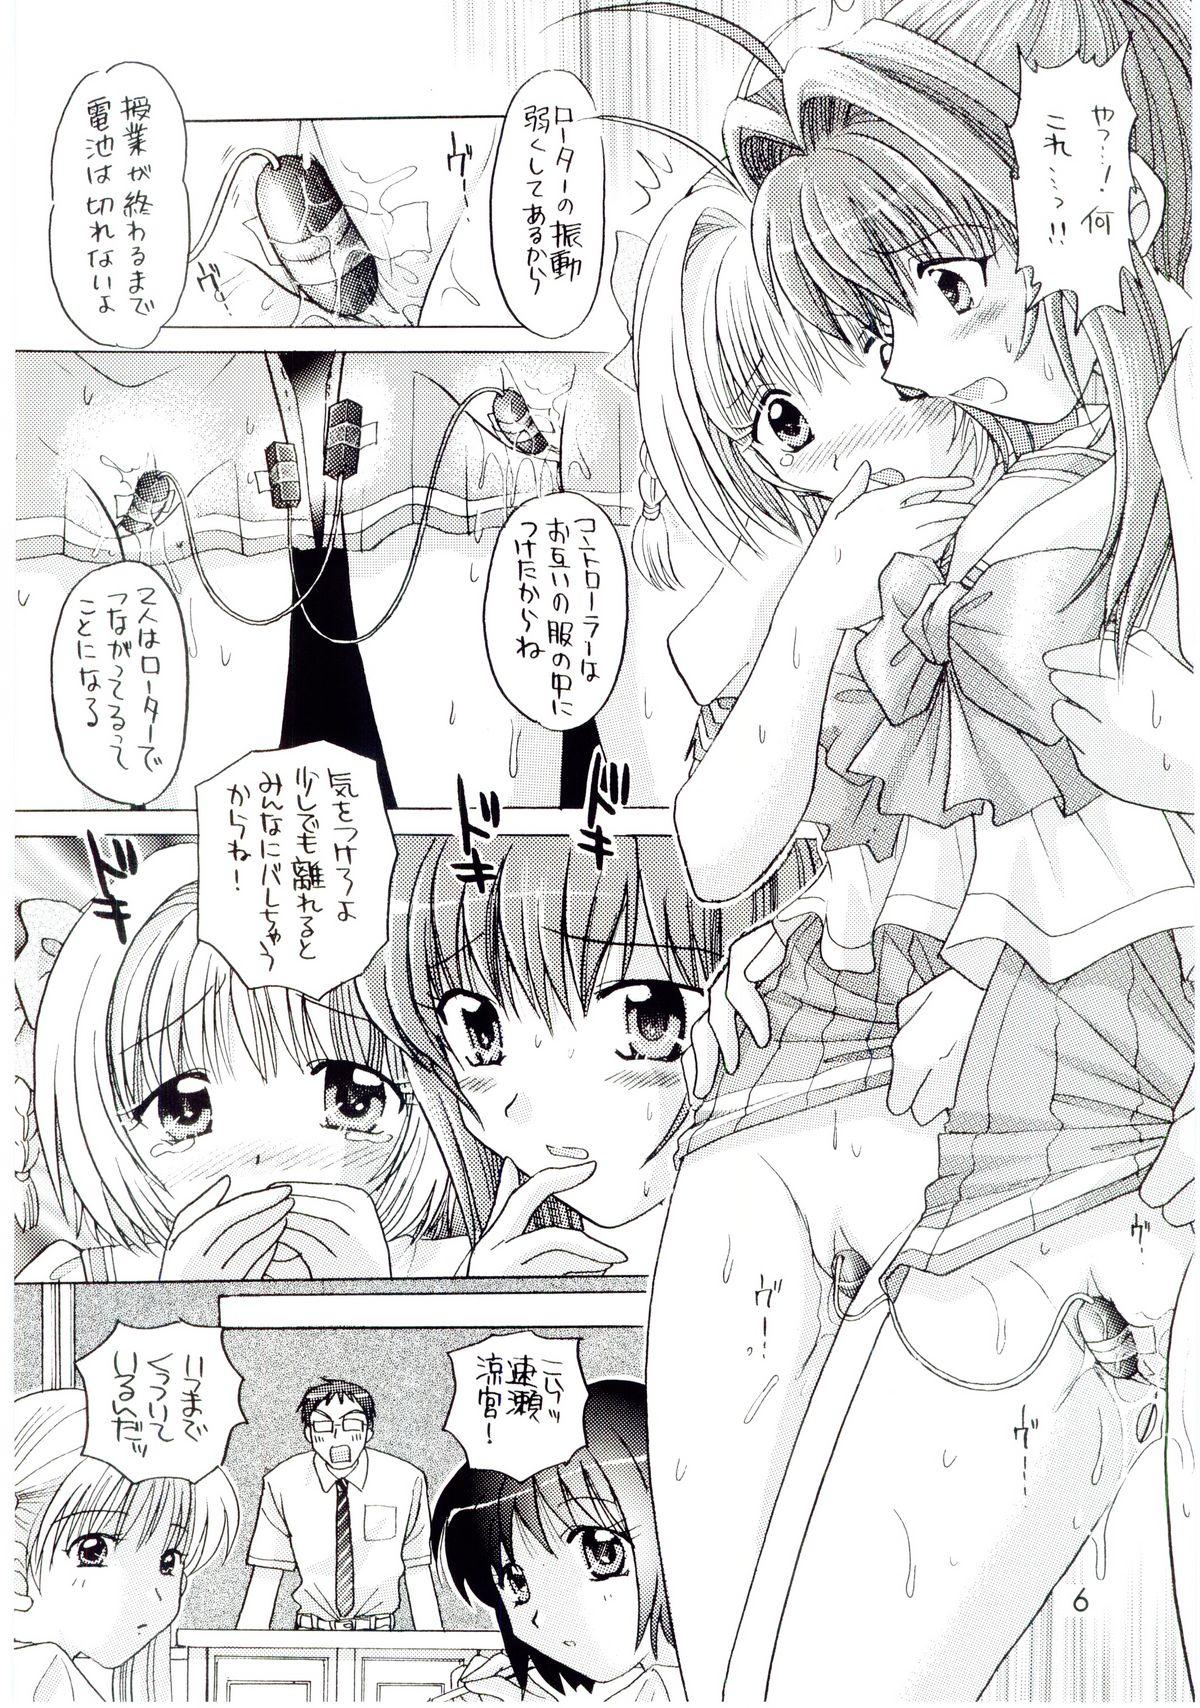 Licking Pussy Kimi ga nozomu eien zettai zetsumei 2 - Kimi ga nozomu eien Village - Page 5